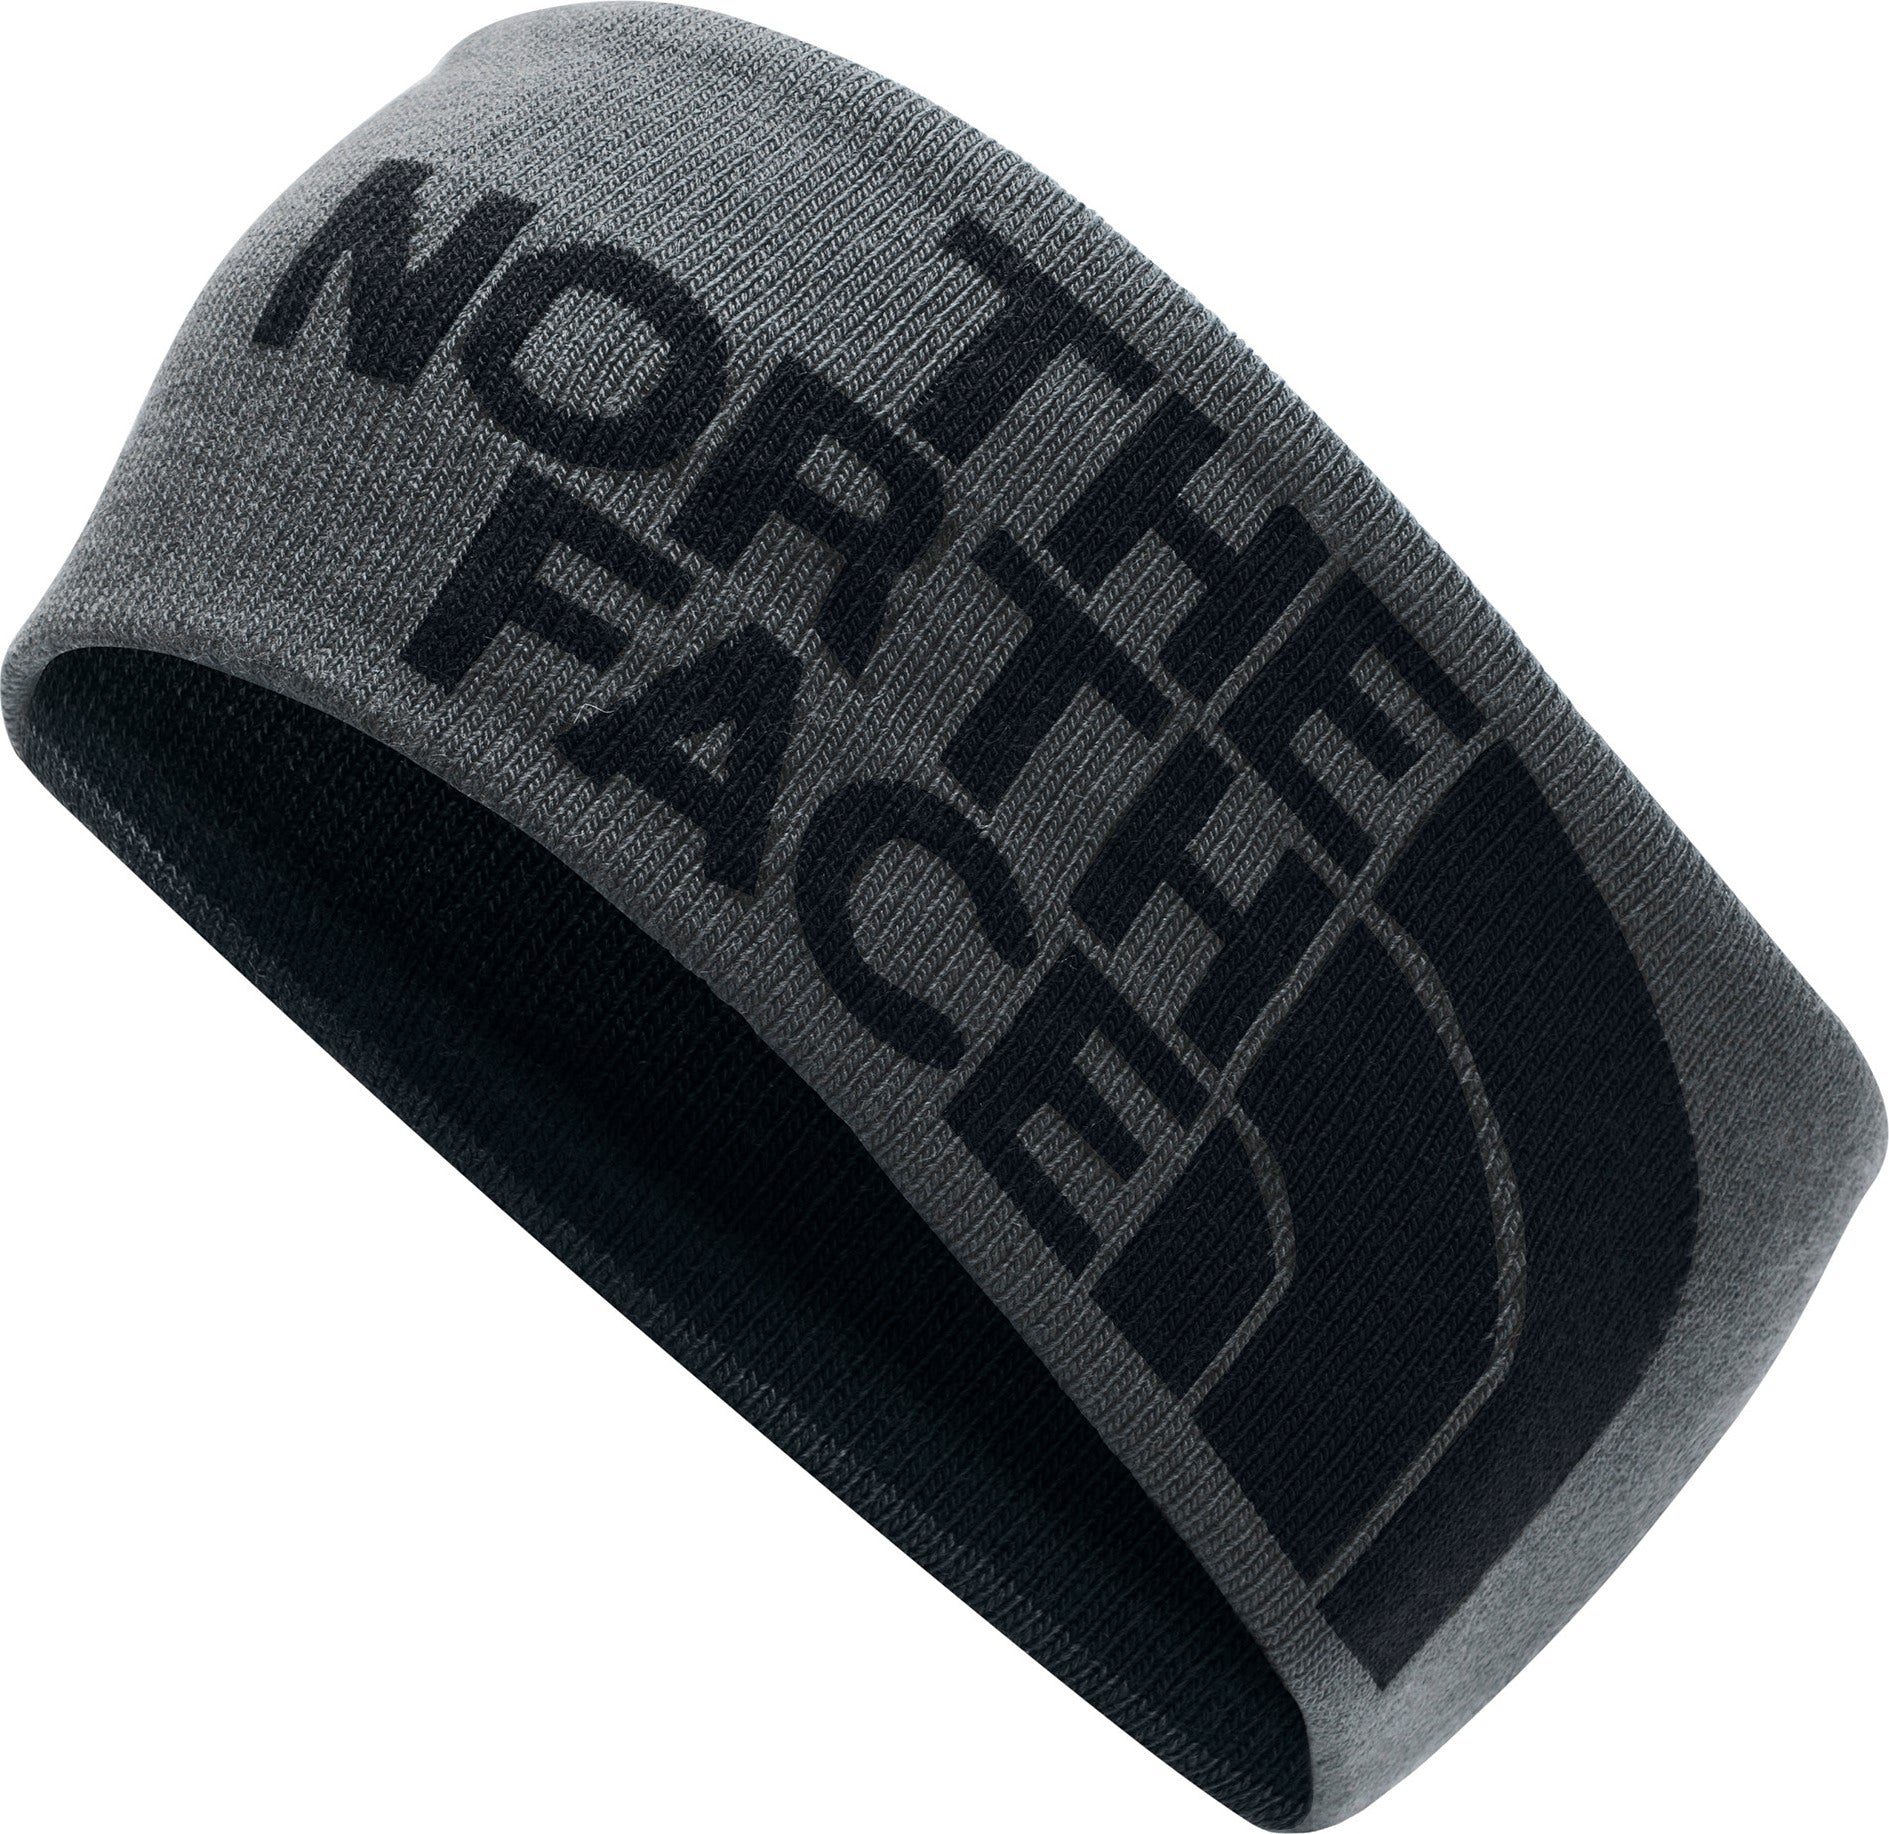 north face fleece headband